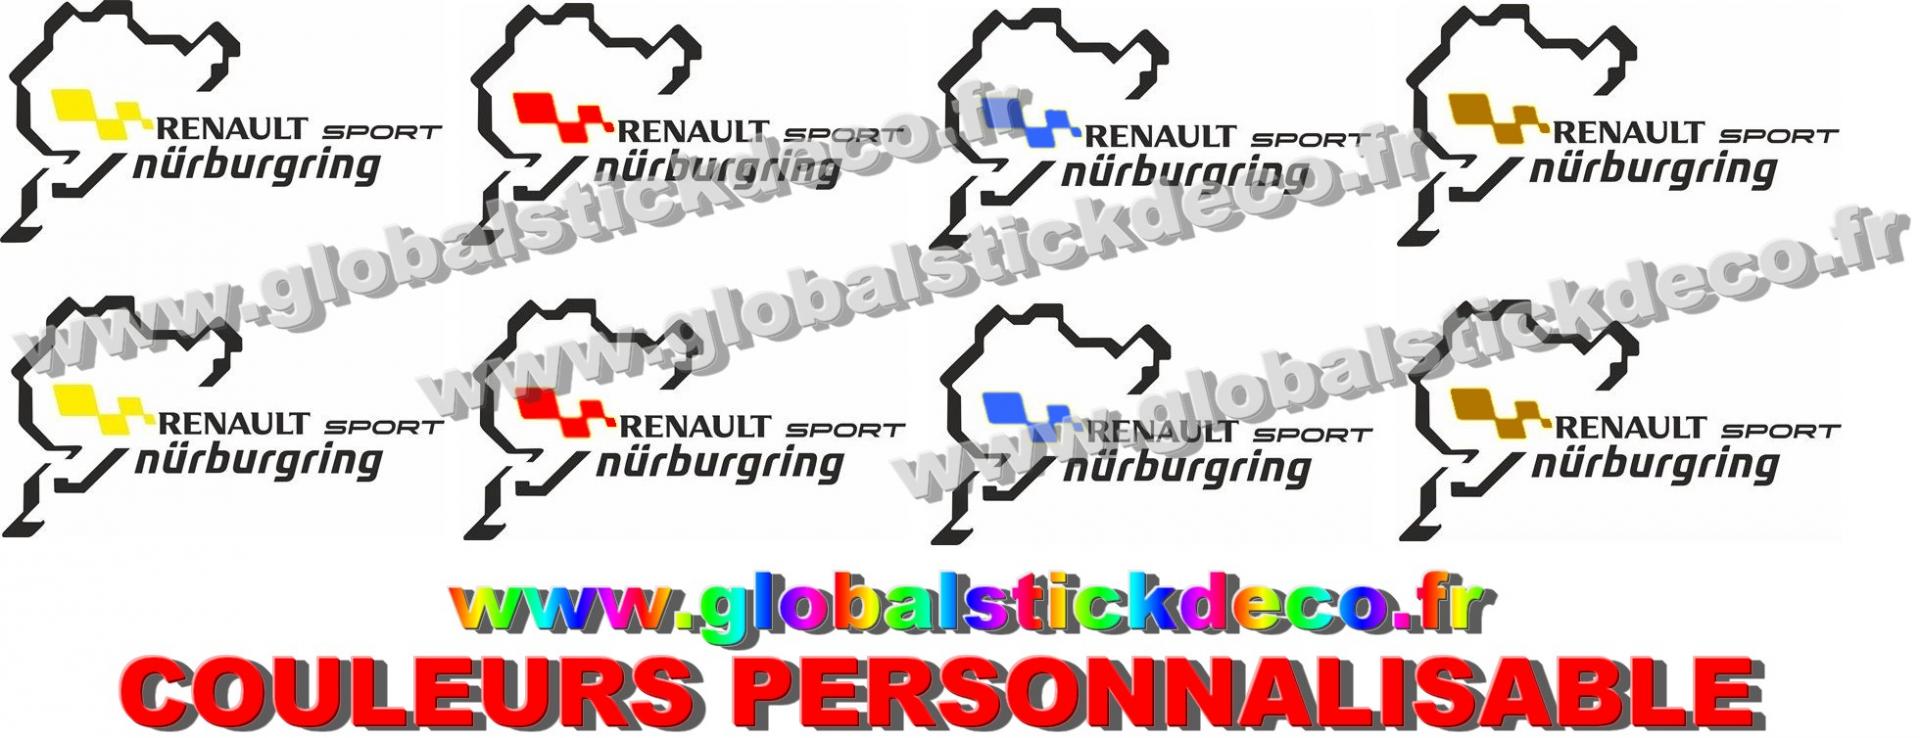 0021995 renault sport nurburgring decals stickers 550